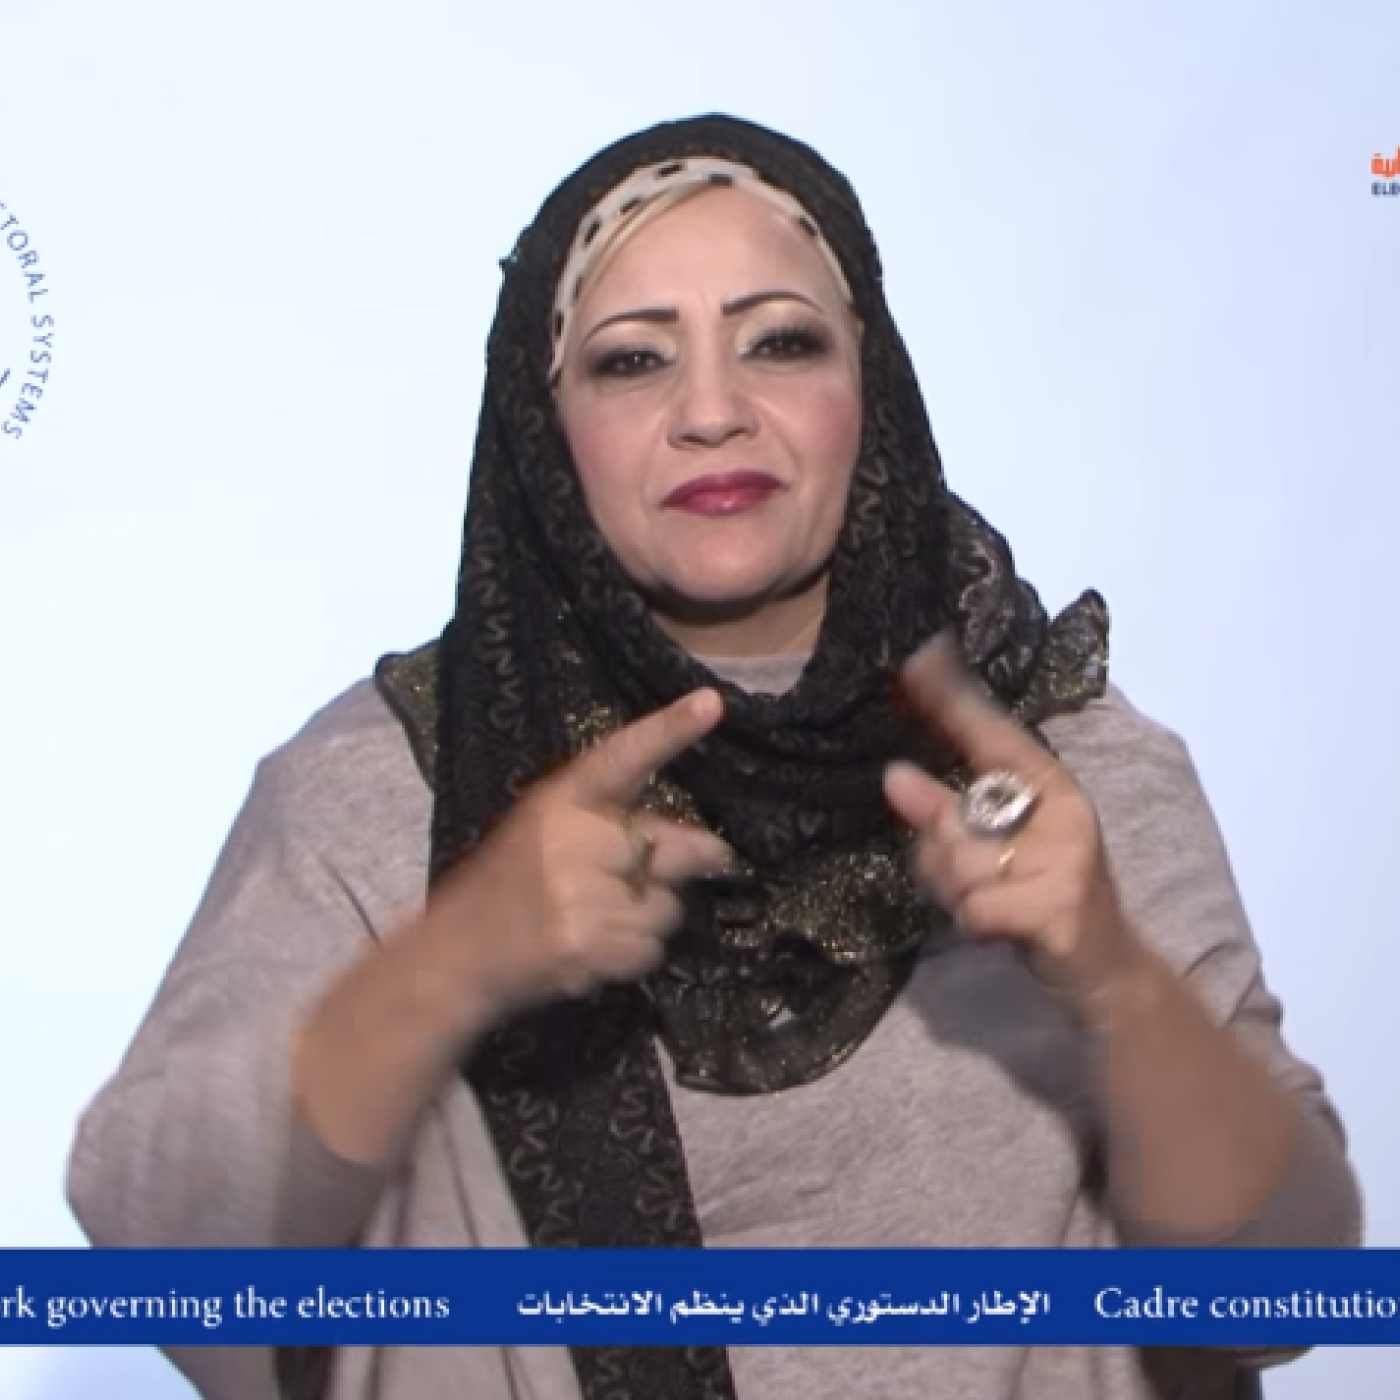 Libyan Electoral Sign Language Lexicon Facilitates Deaf Empowerment video screenshot image